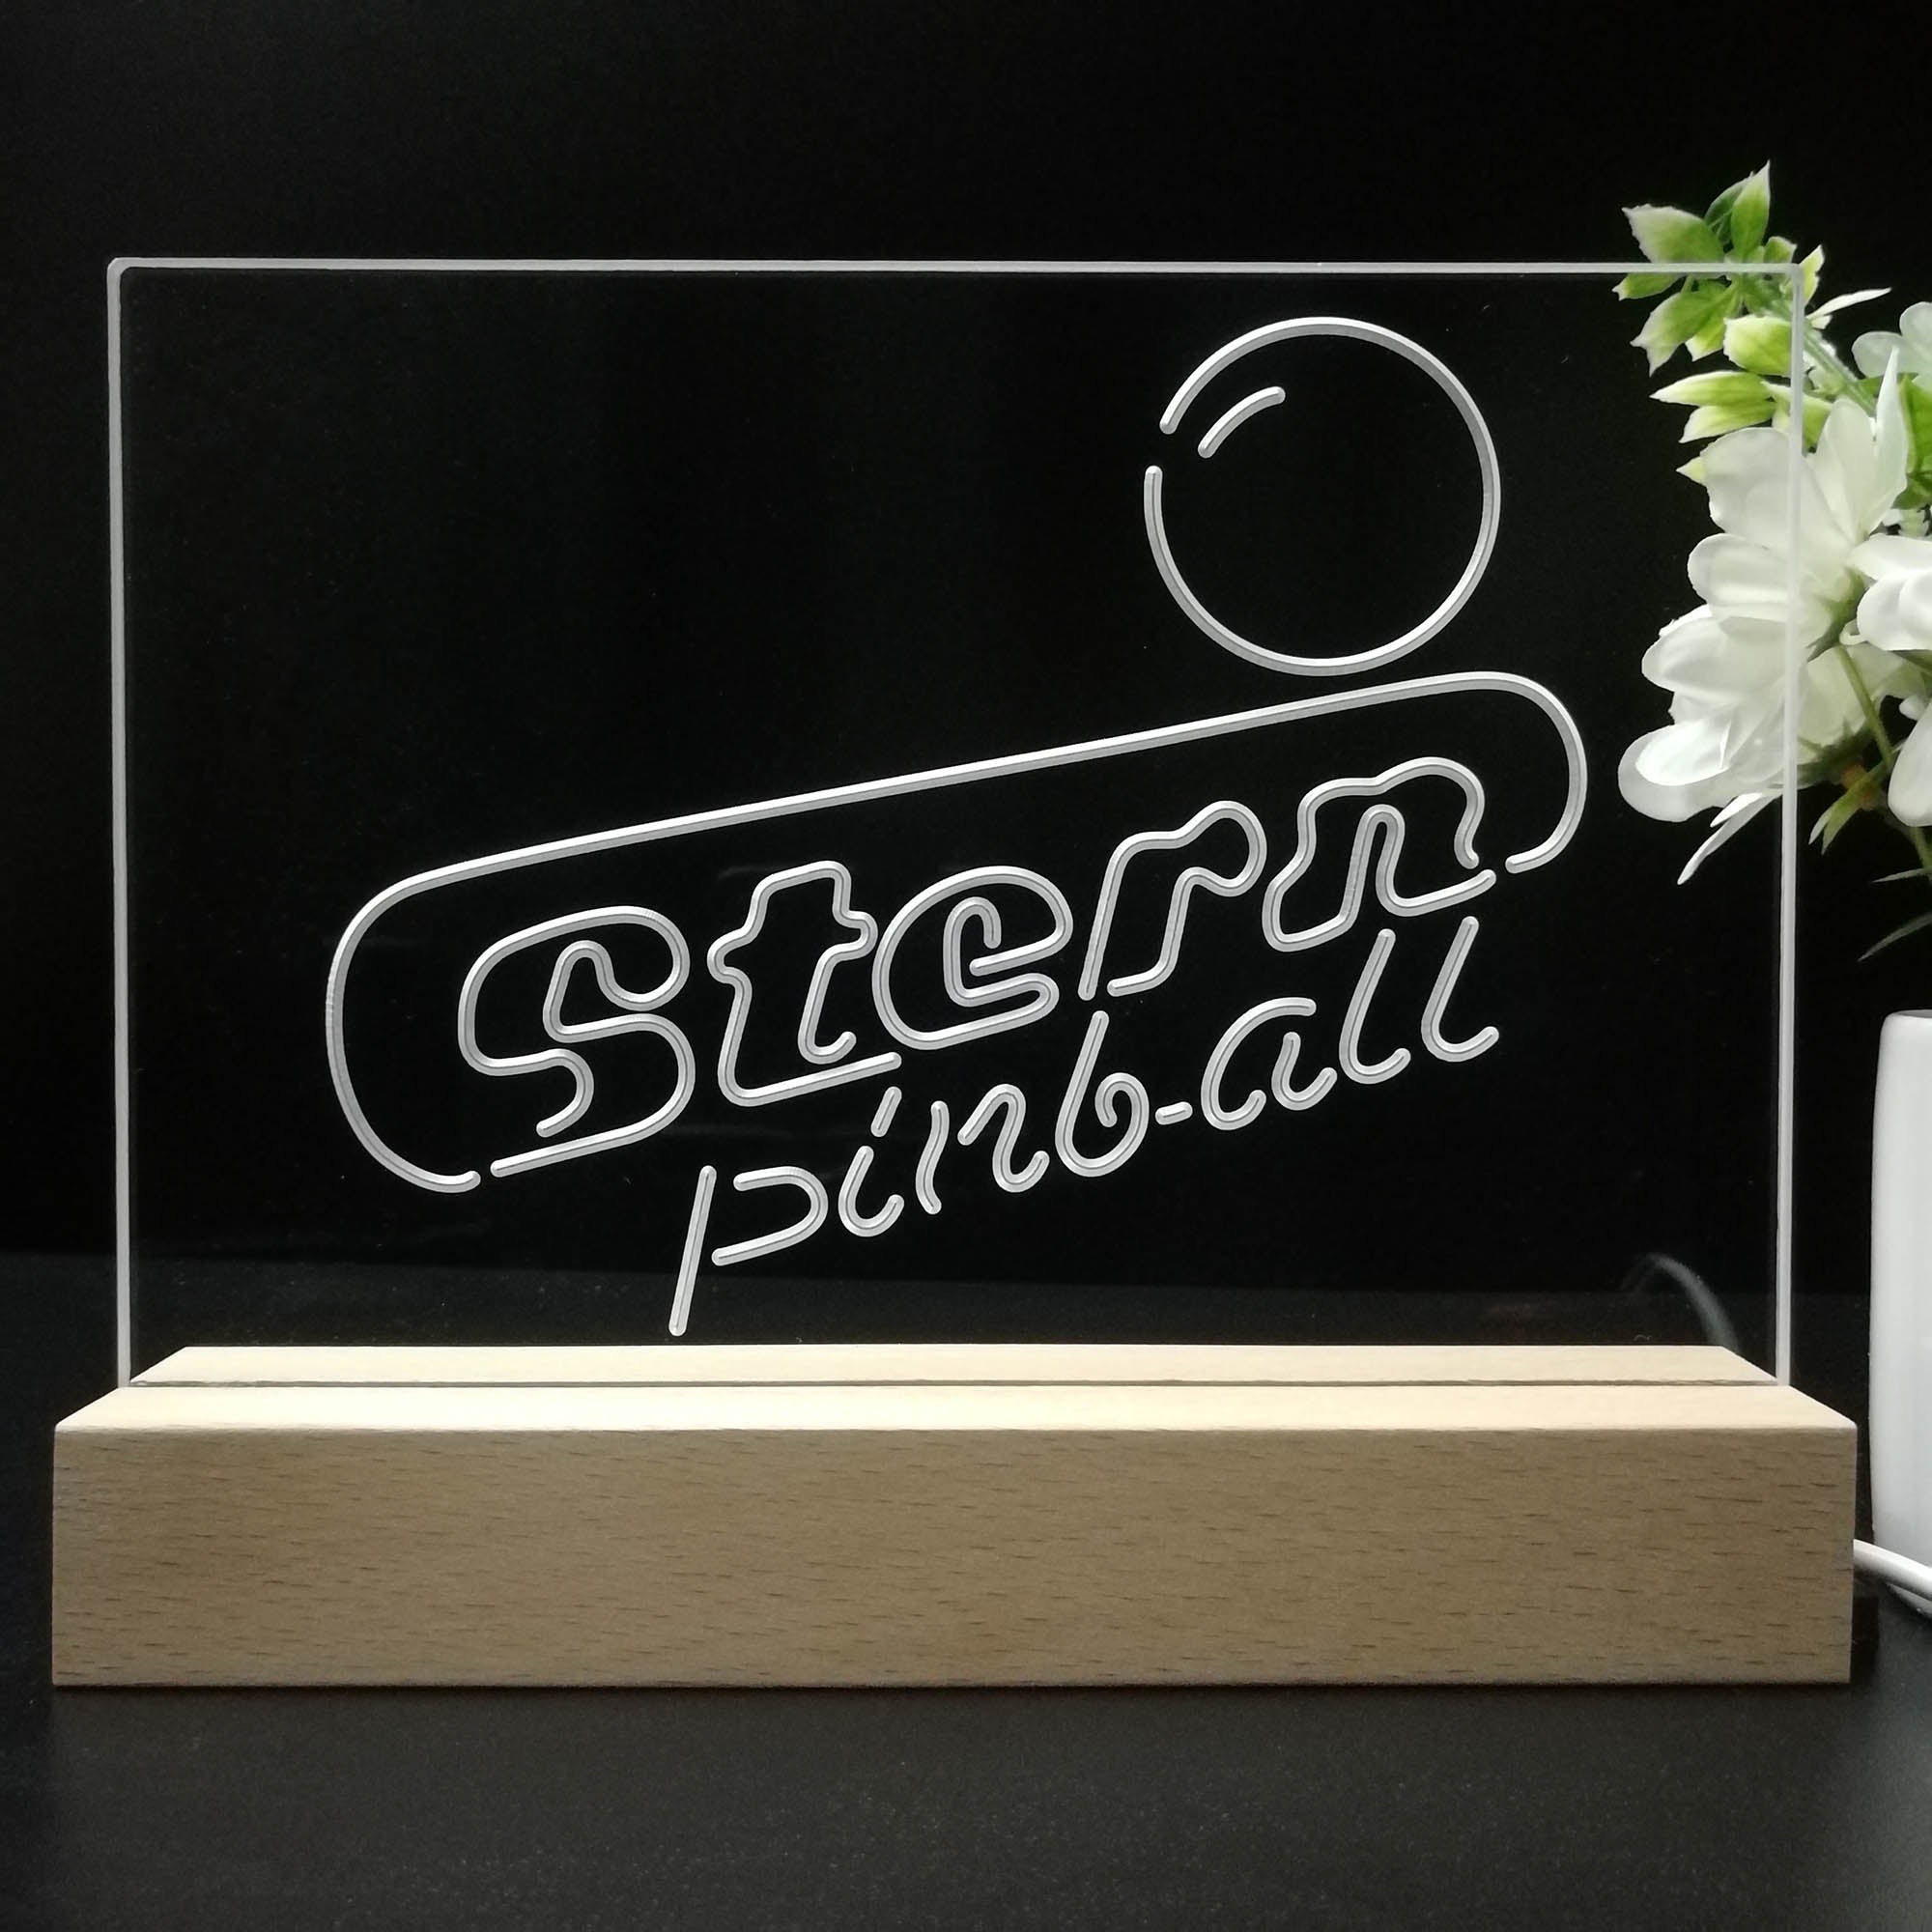 Stern Pinball Sport Team Night Lamp 3D Illusion Lamp